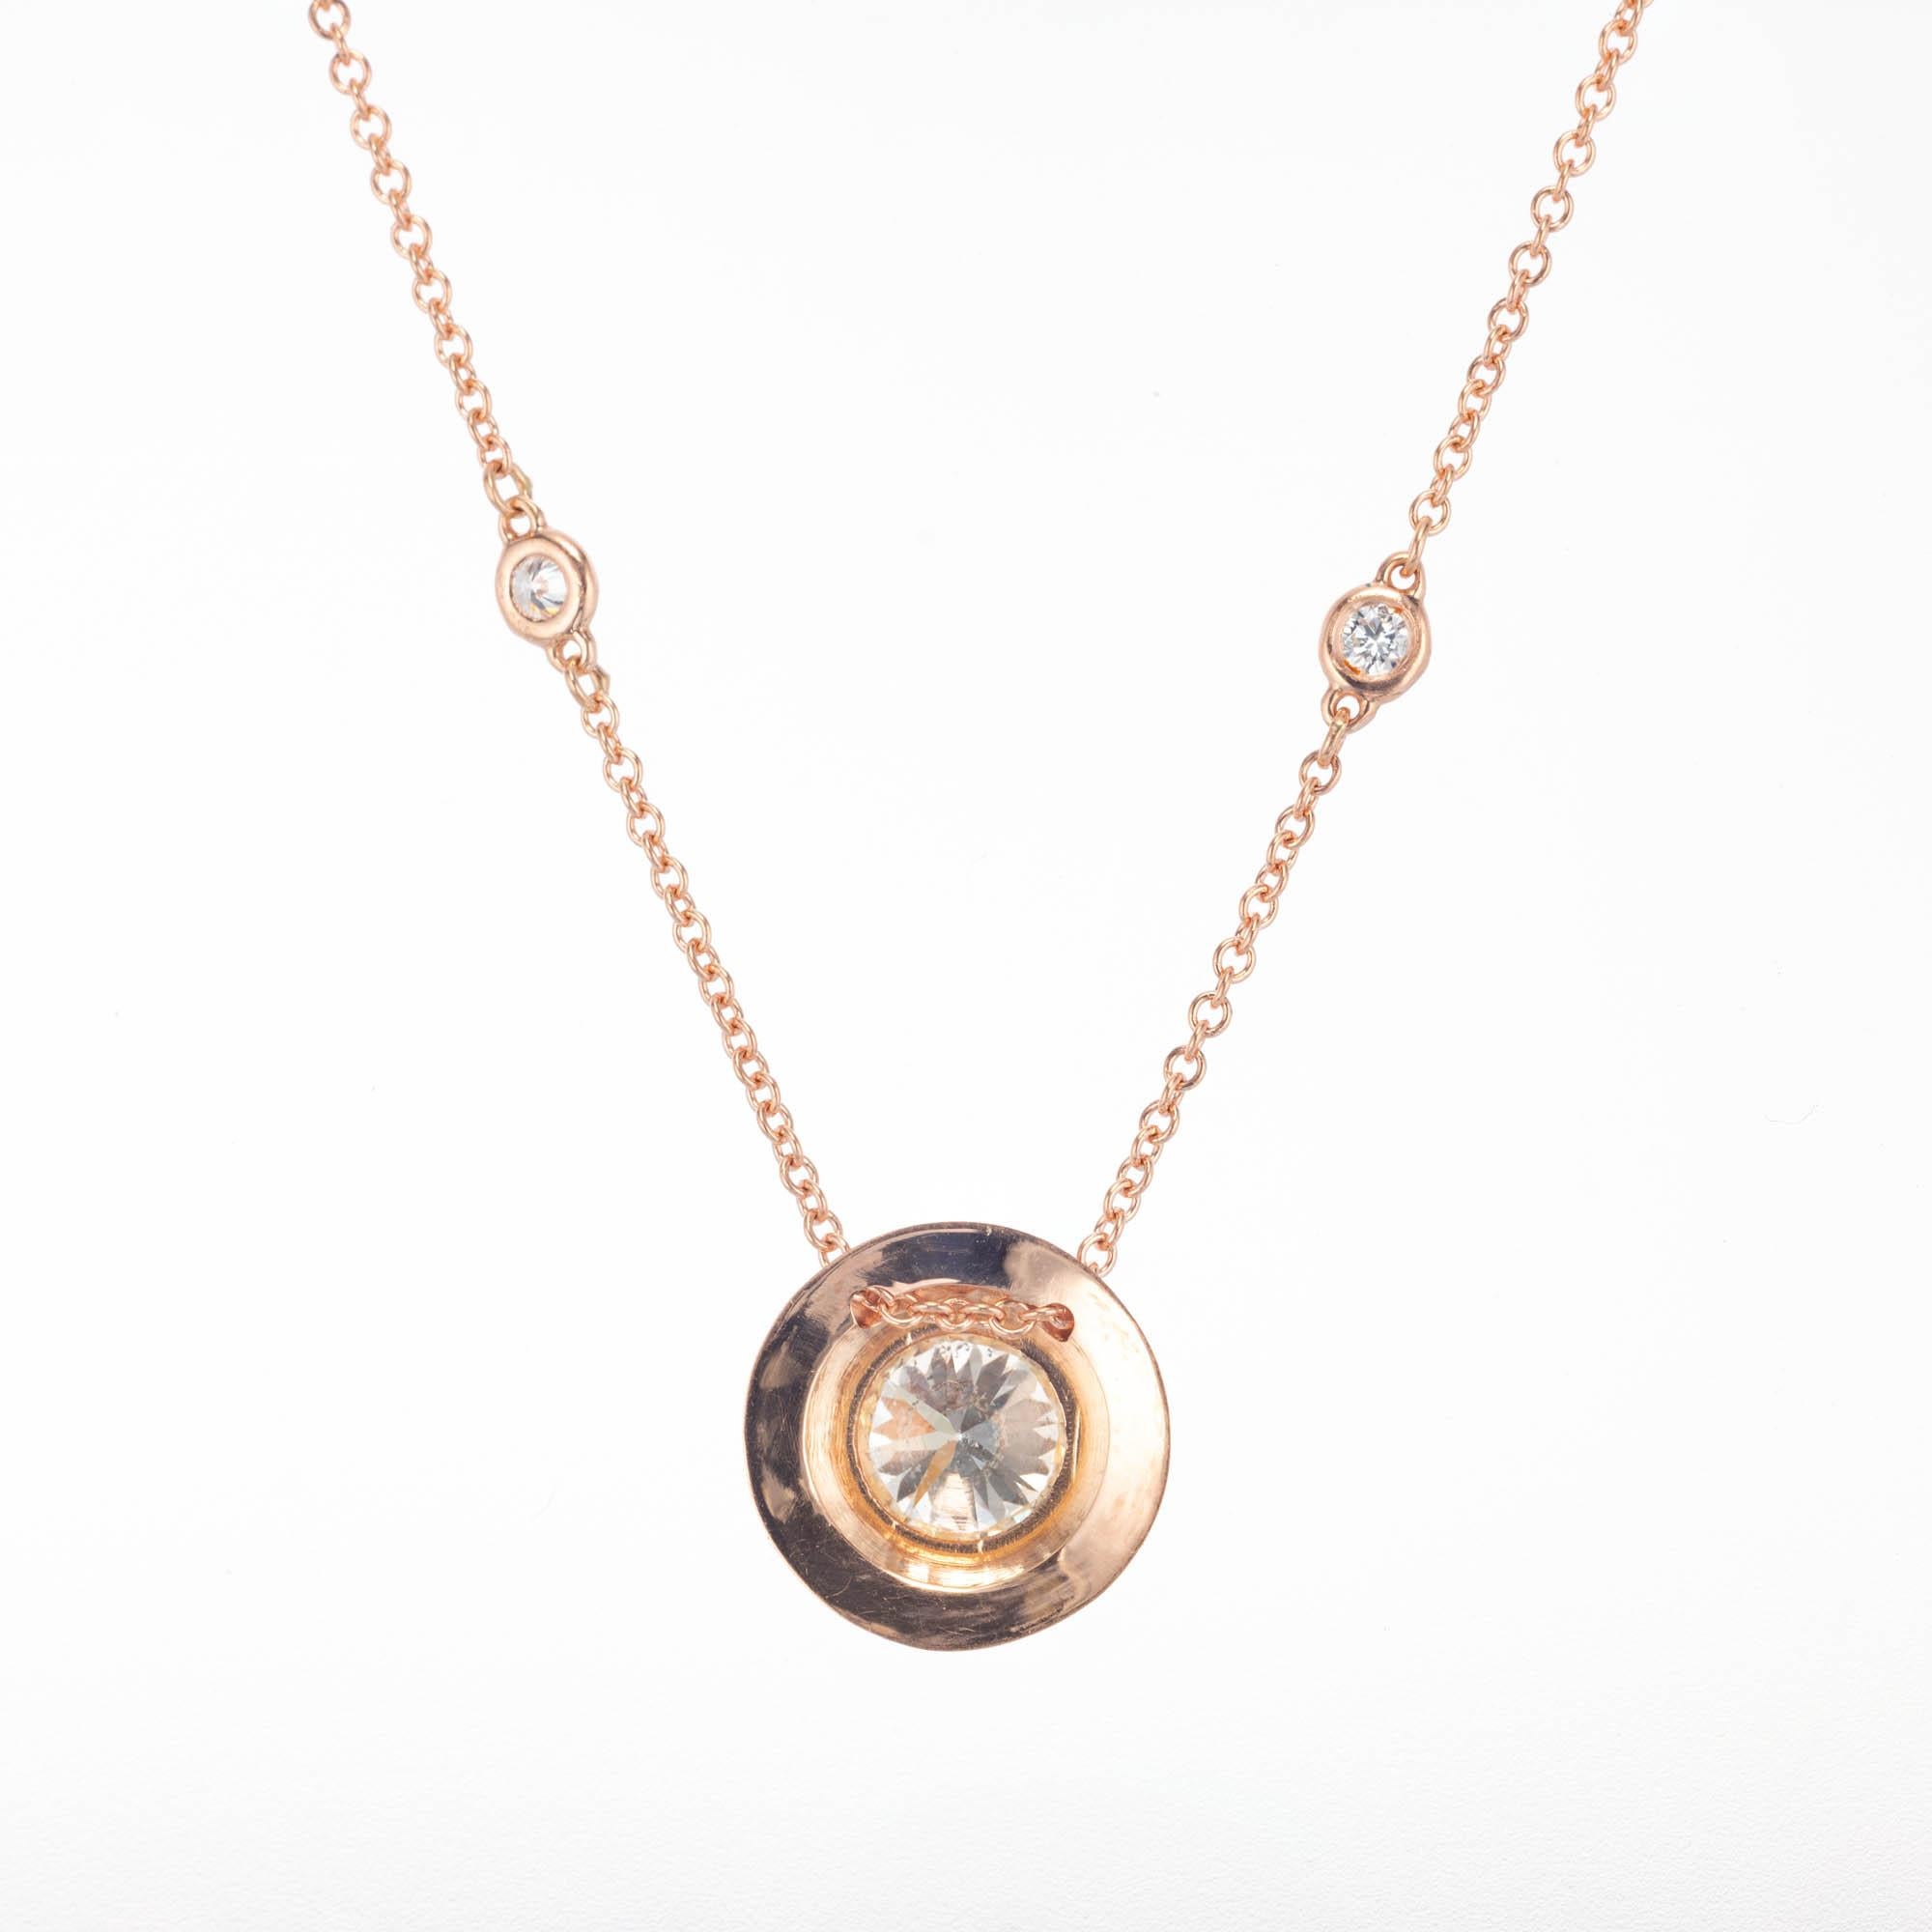 Bezel set diamond halo pendant in 14k rose gold on a diamond by the yard style chain. EGL certified 

1 round brilliant cut J-K SI diamonds, Approximate 1.15 Carat. EGL Certificate # US400115221D
6 round brilliant cut H-I VS-SI diamonds, Approximate